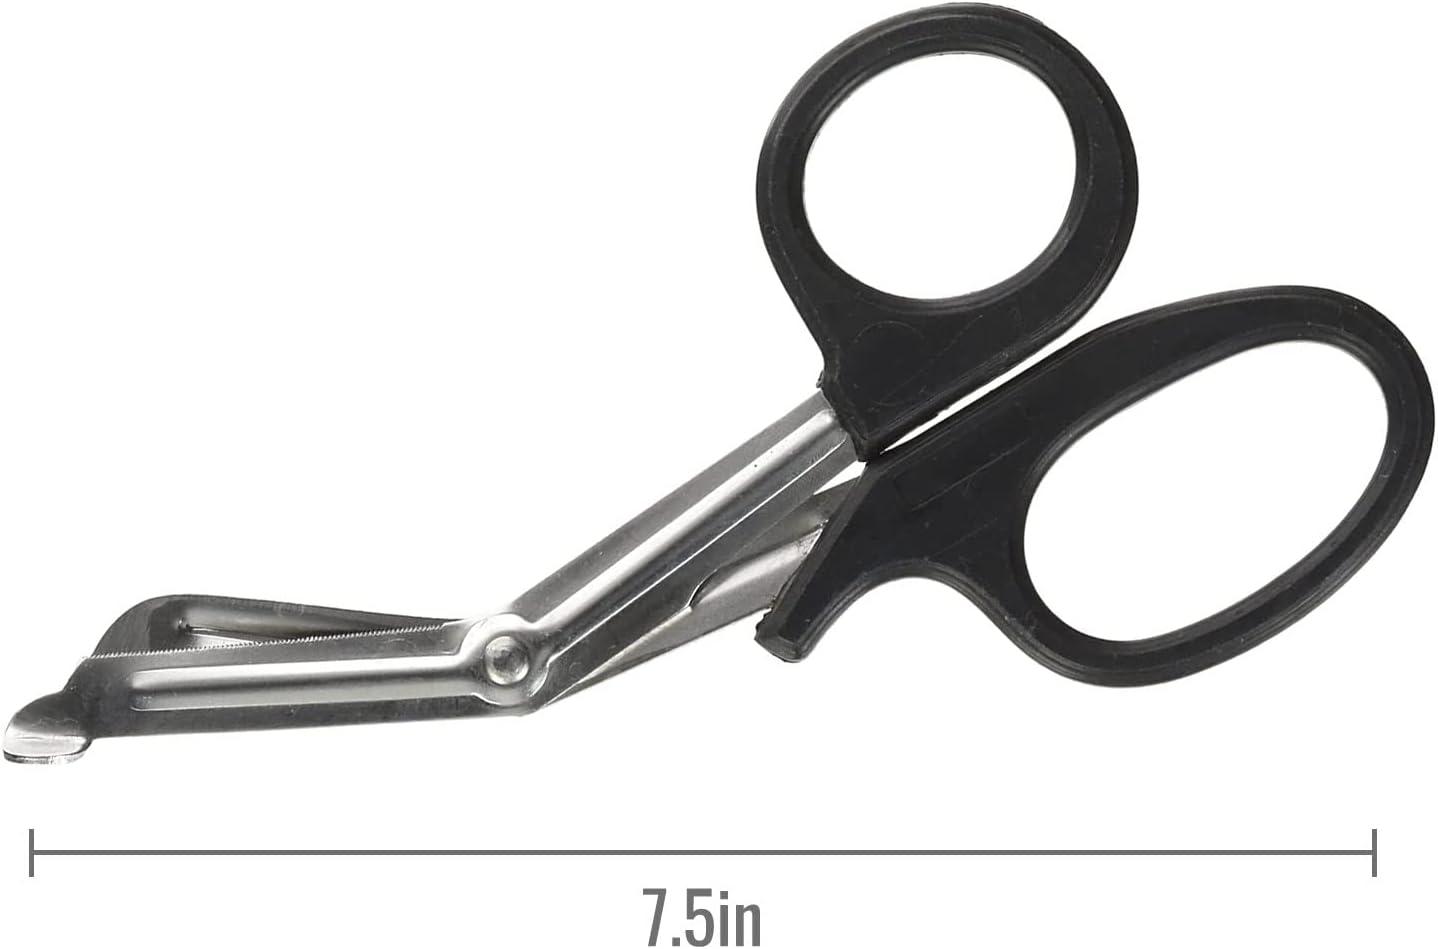 SPIRE Tuff Cut Utility Scissor, Bandage Scissors Trauma Shears for Nursing  Household, Military-Grade Scissors SHEARS 7.5